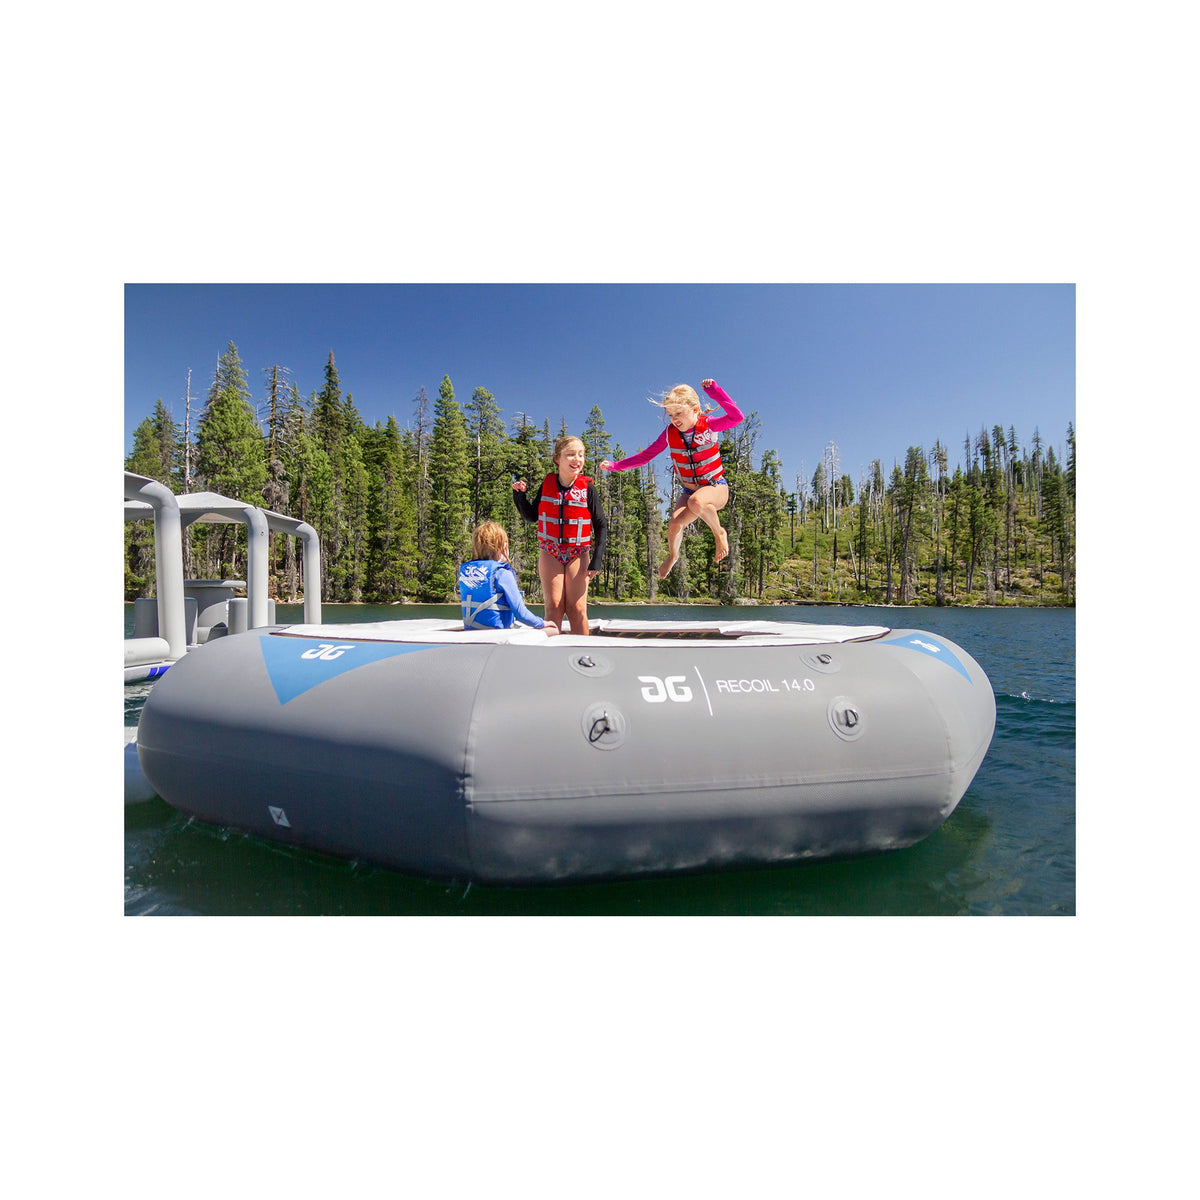 Aquaglide Recoil Water Trampoline 14.0 with C-Deck Boarding Platform